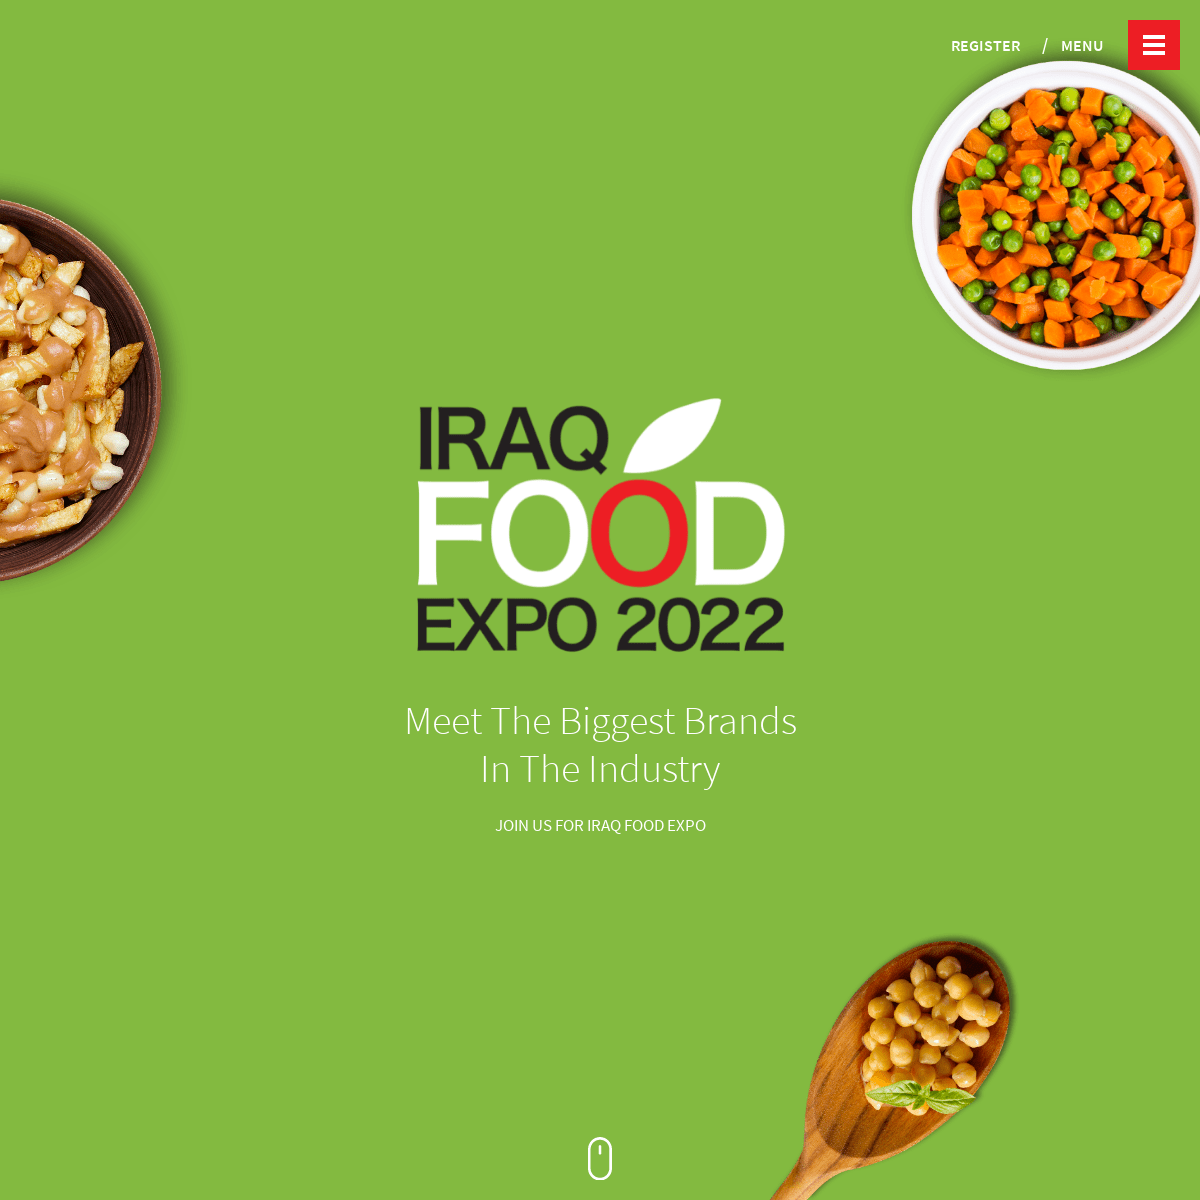 IRQA FOOD EXPO